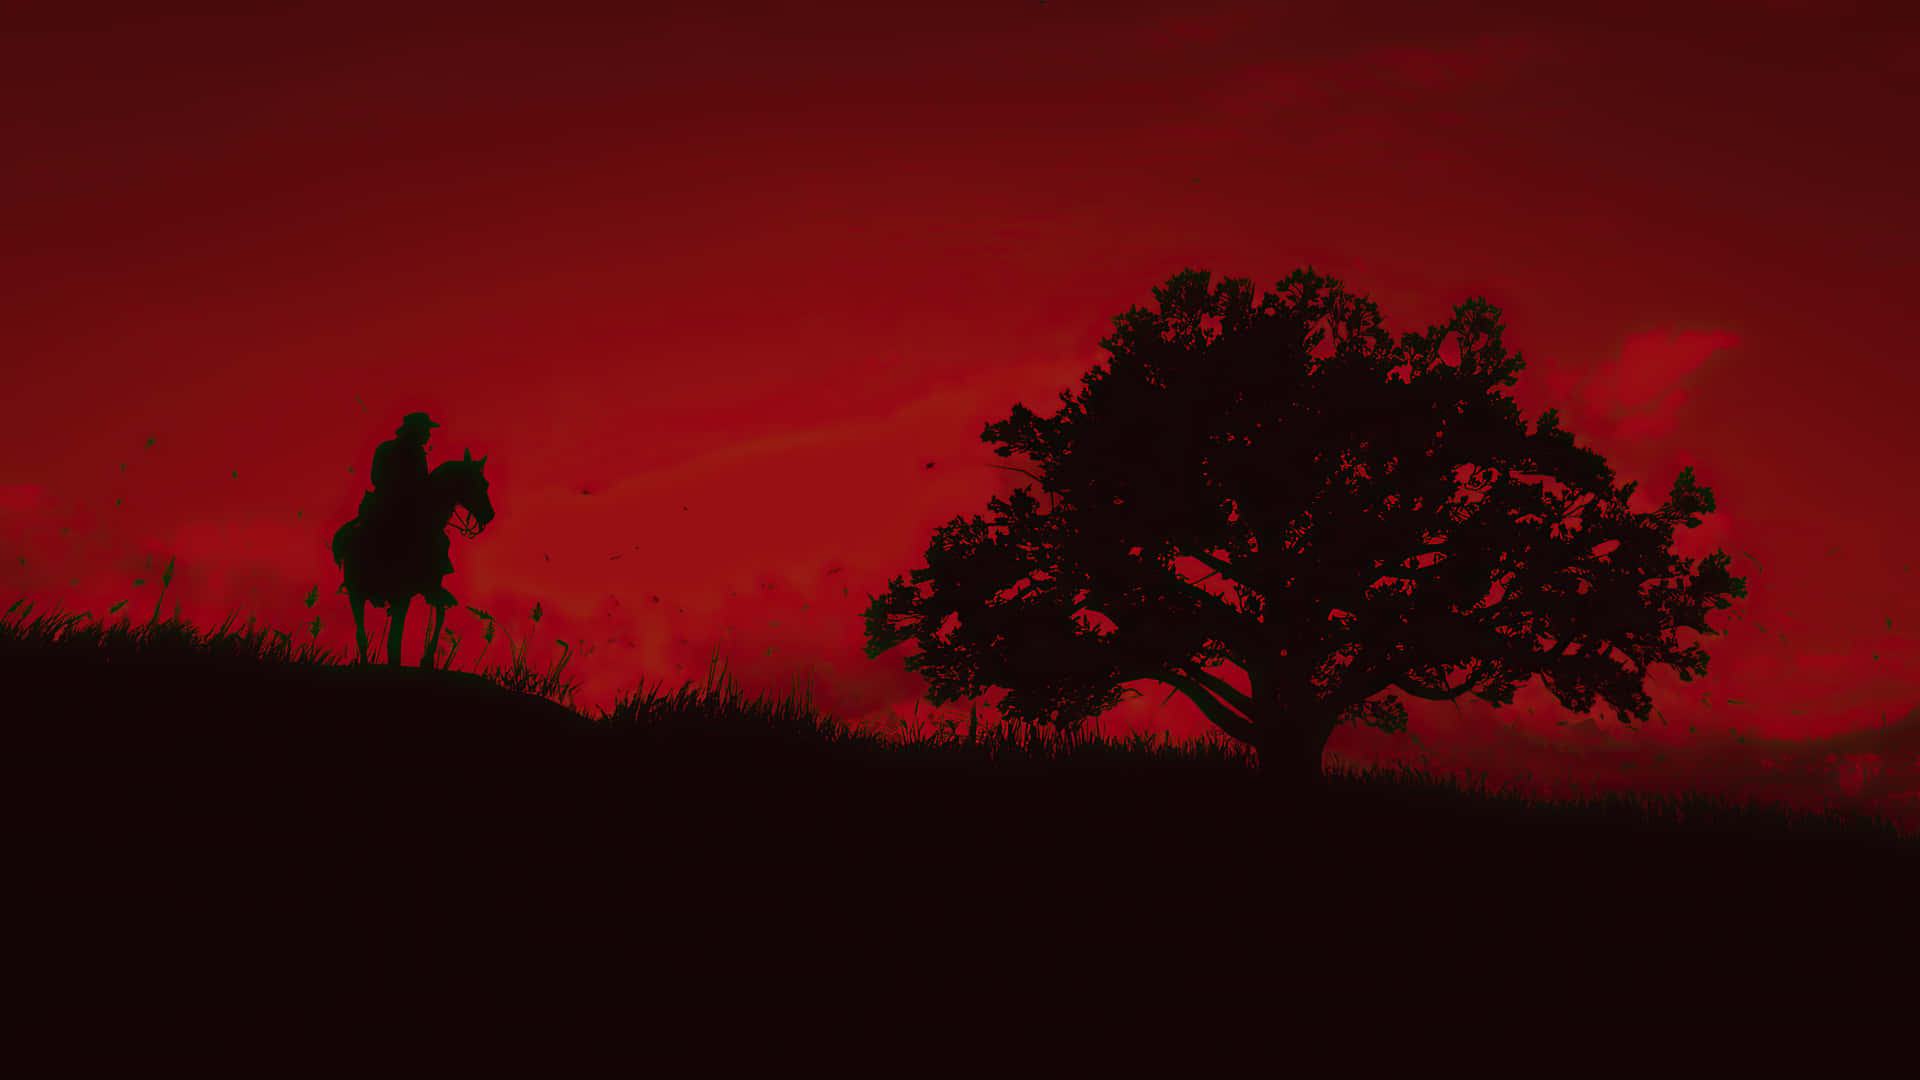 Röttgaming Red Dead Redemption. Wallpaper